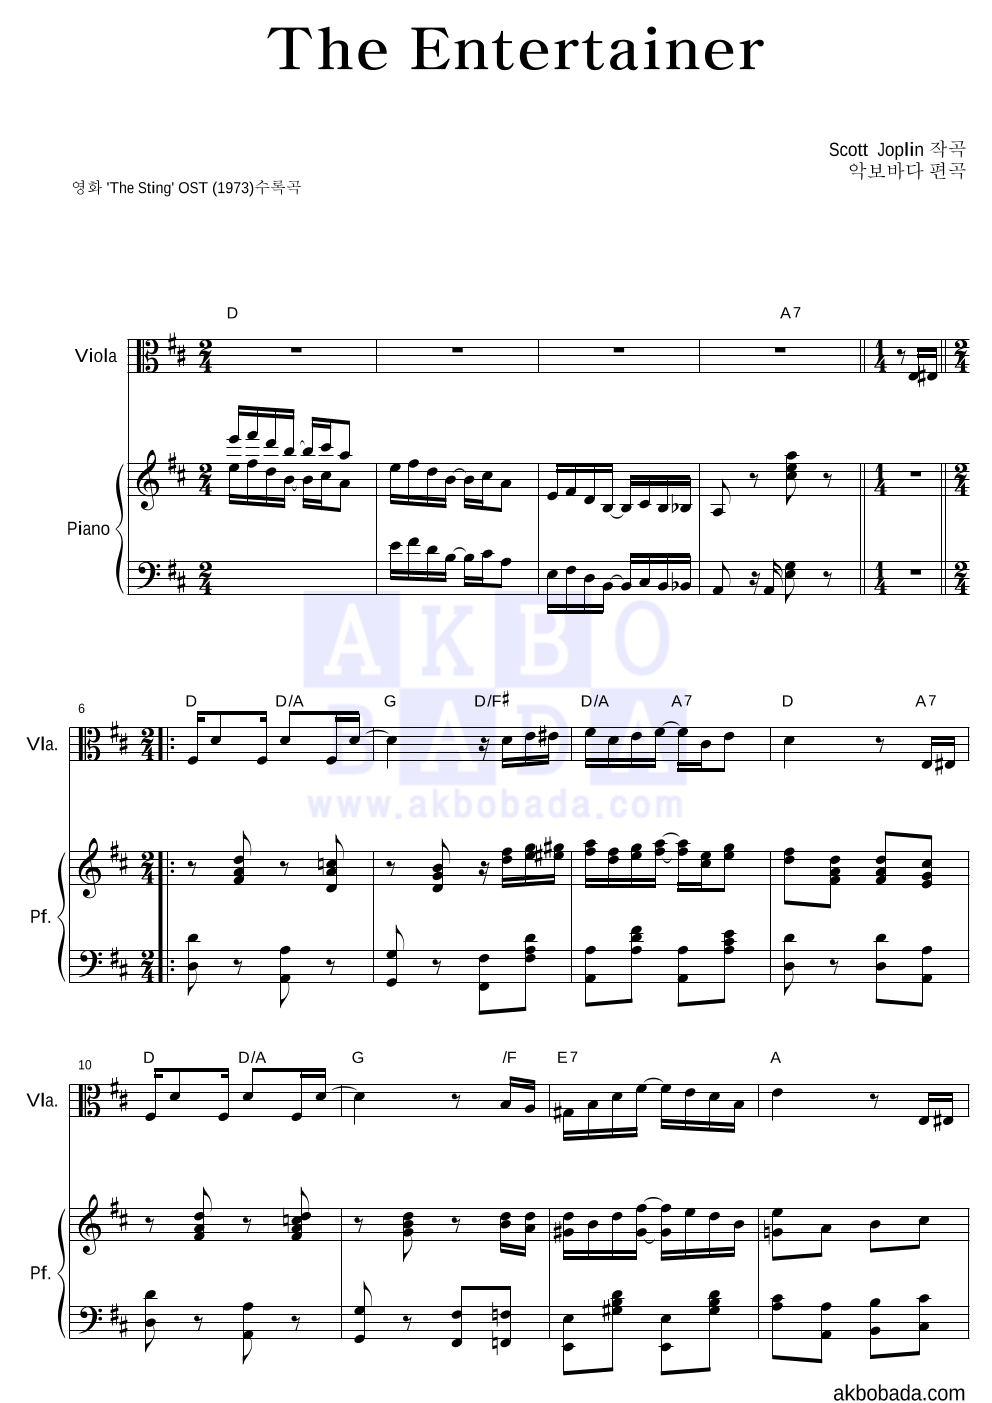 Scott Joplin - The Entertainer 비올라&피아노 악보 